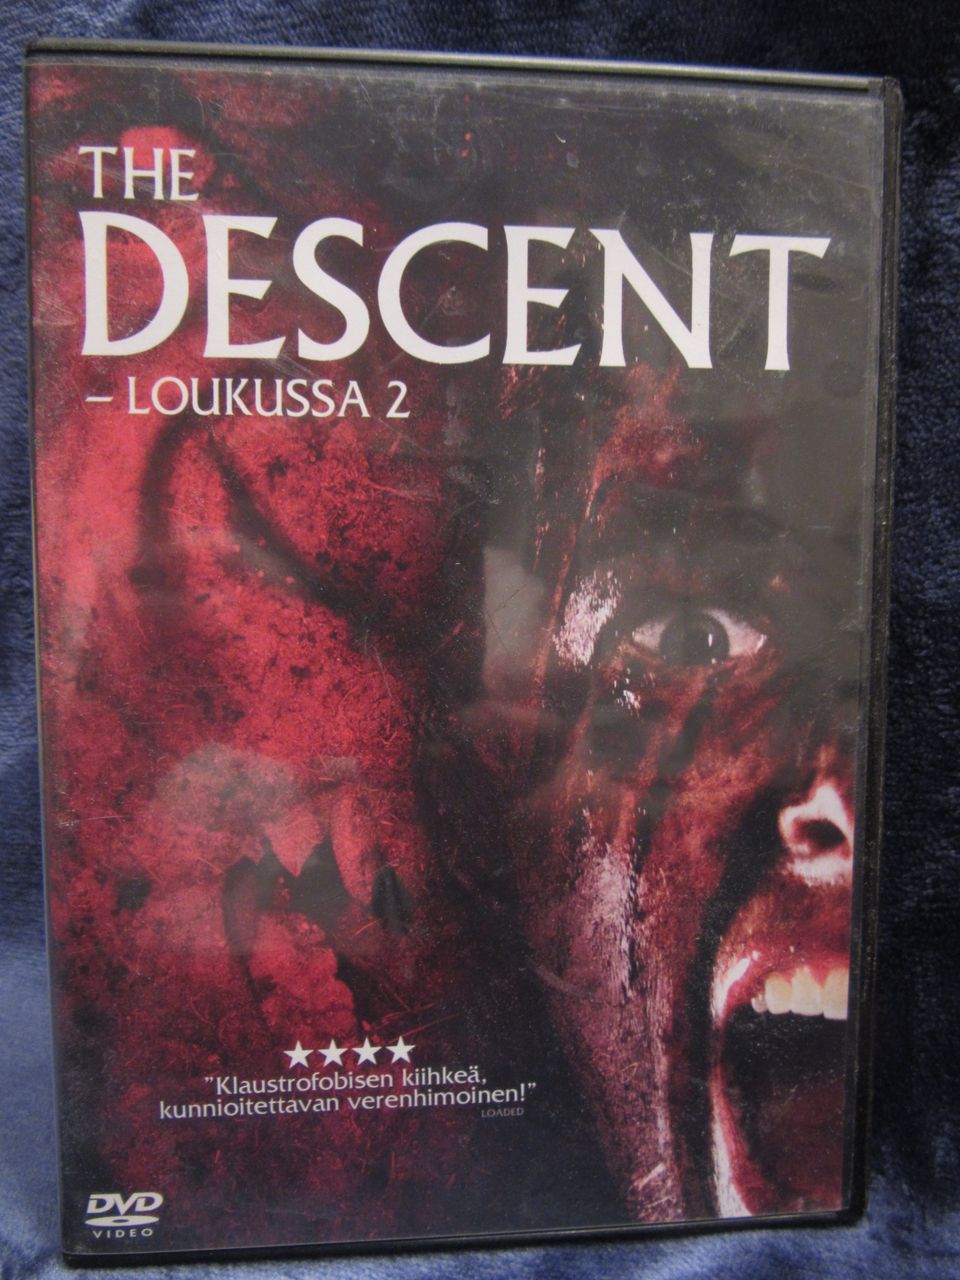 The Descent – Loukussa 2 dvd